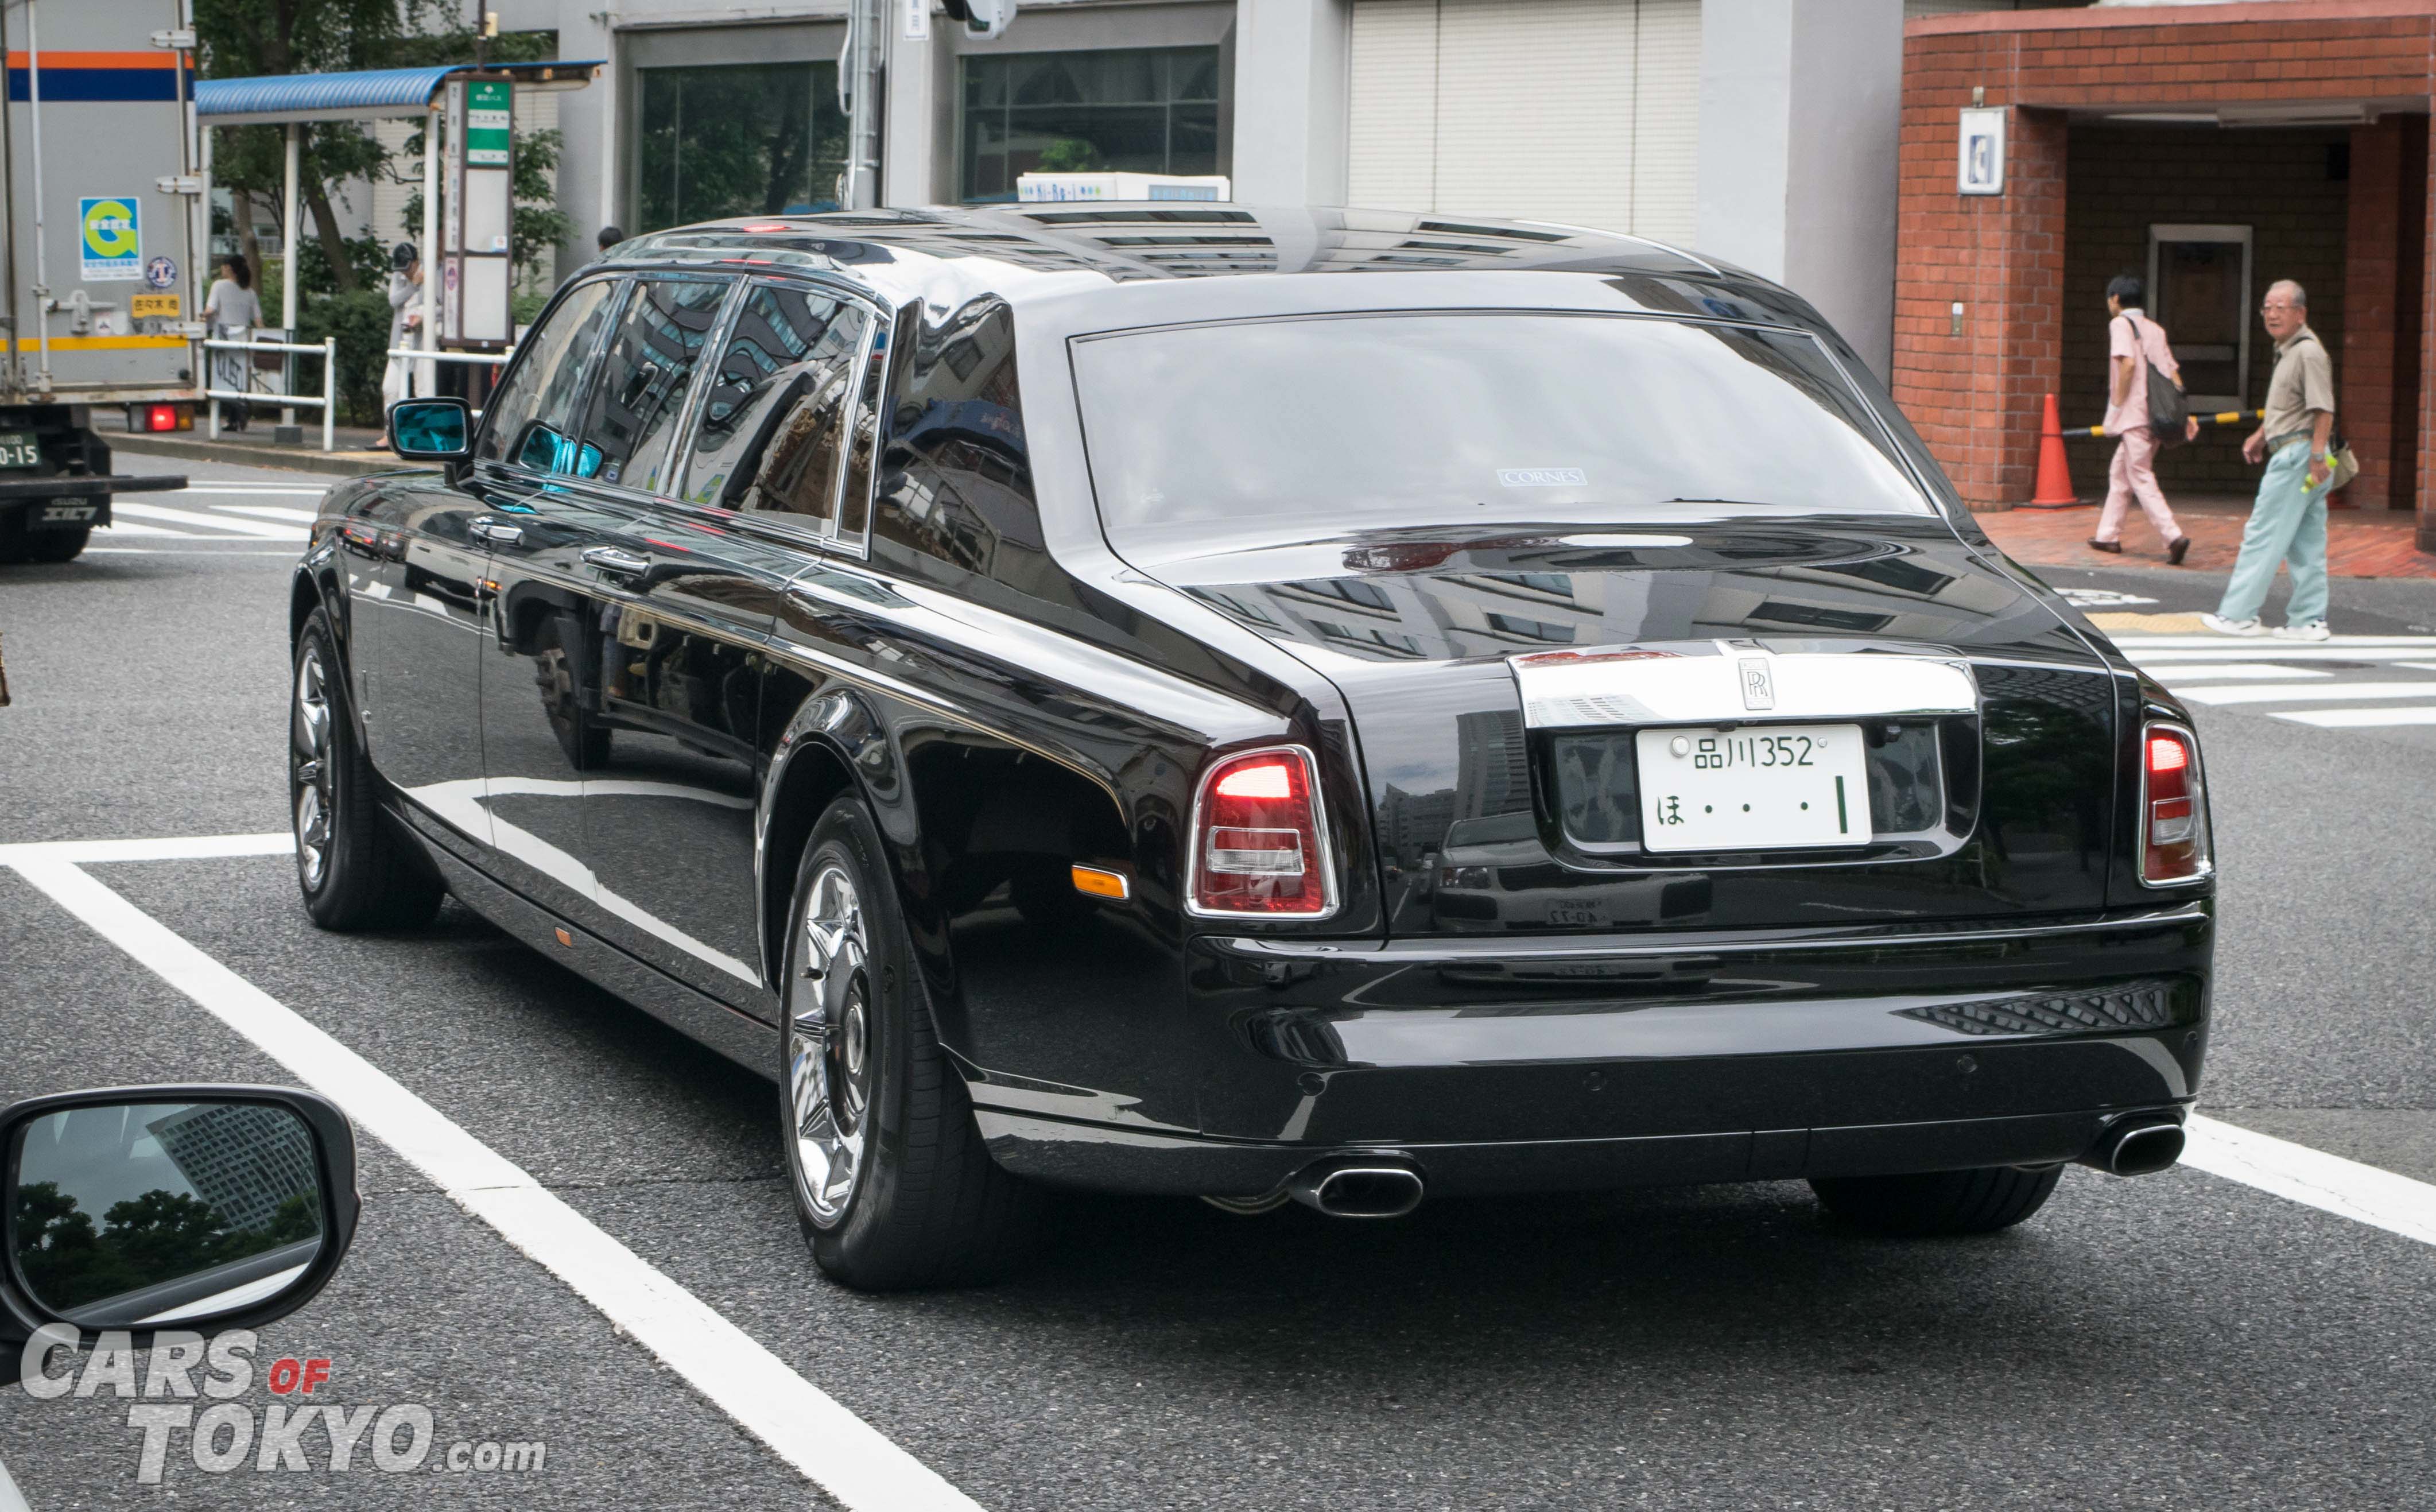 cars-of-tokyo-luxury-rolls-royce-phantom-xxl